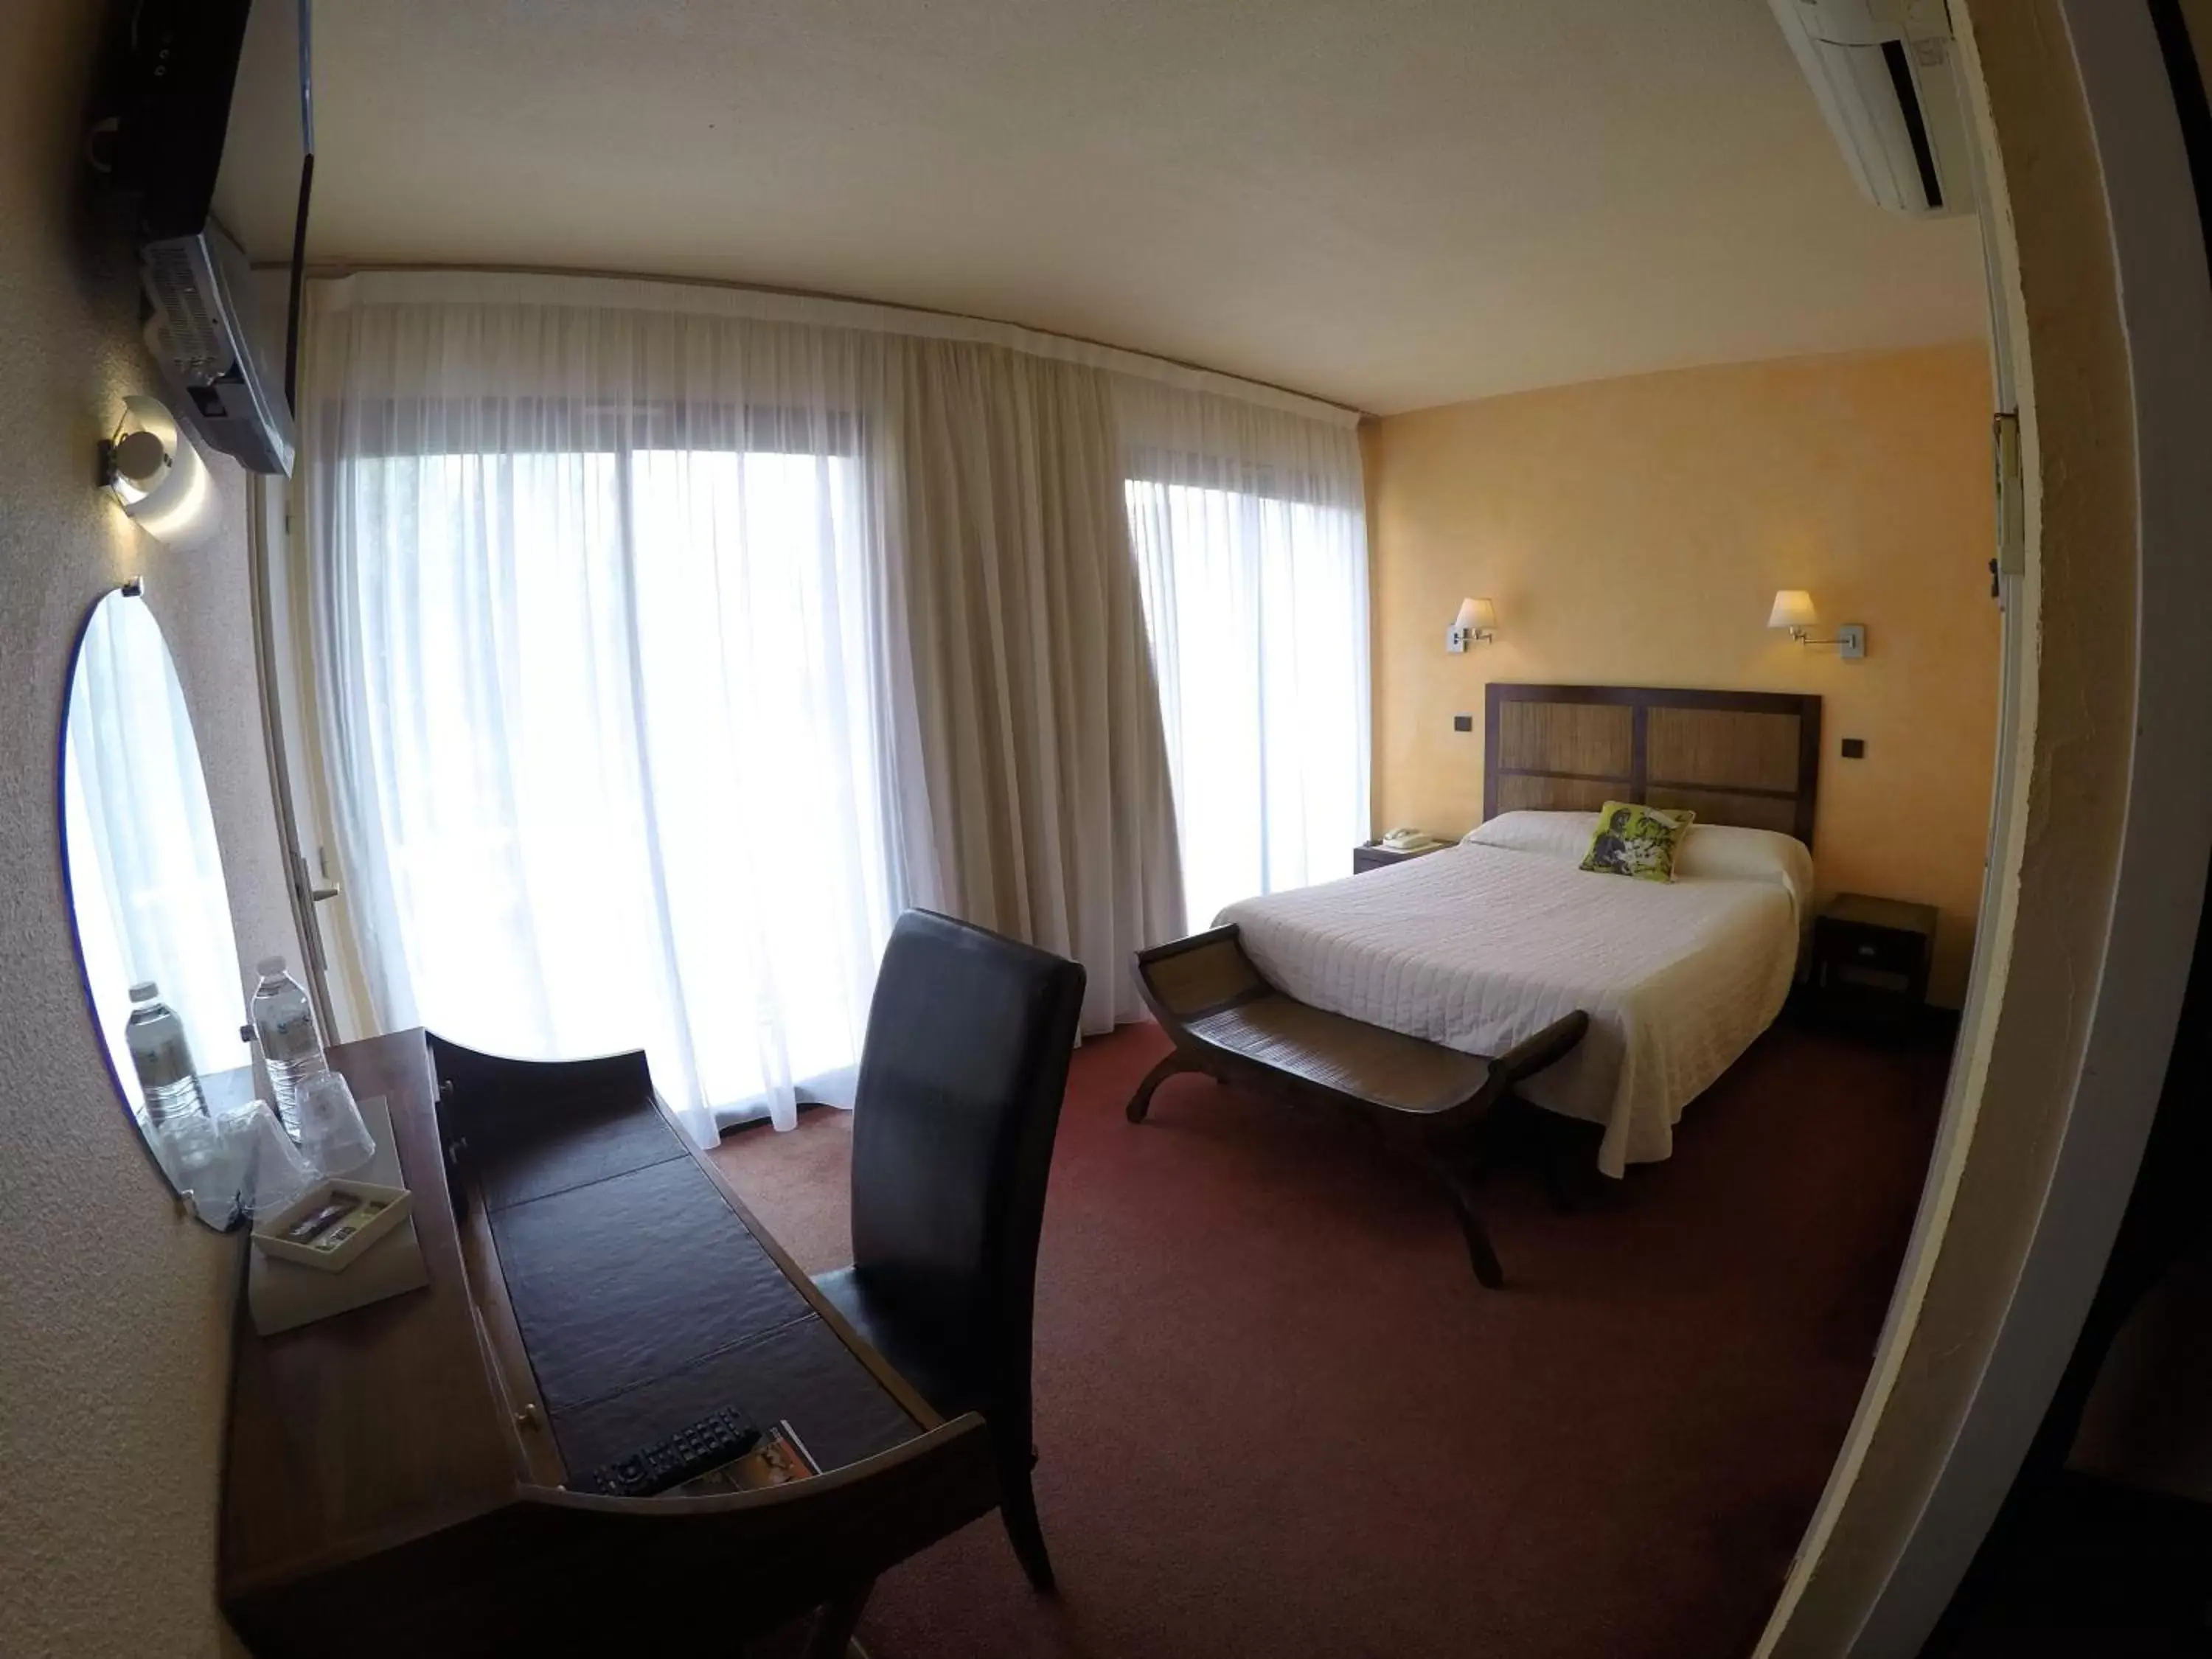 Bedroom in Noemys Gradignan - ex Cit'Hotel Le Chalet Lyrique